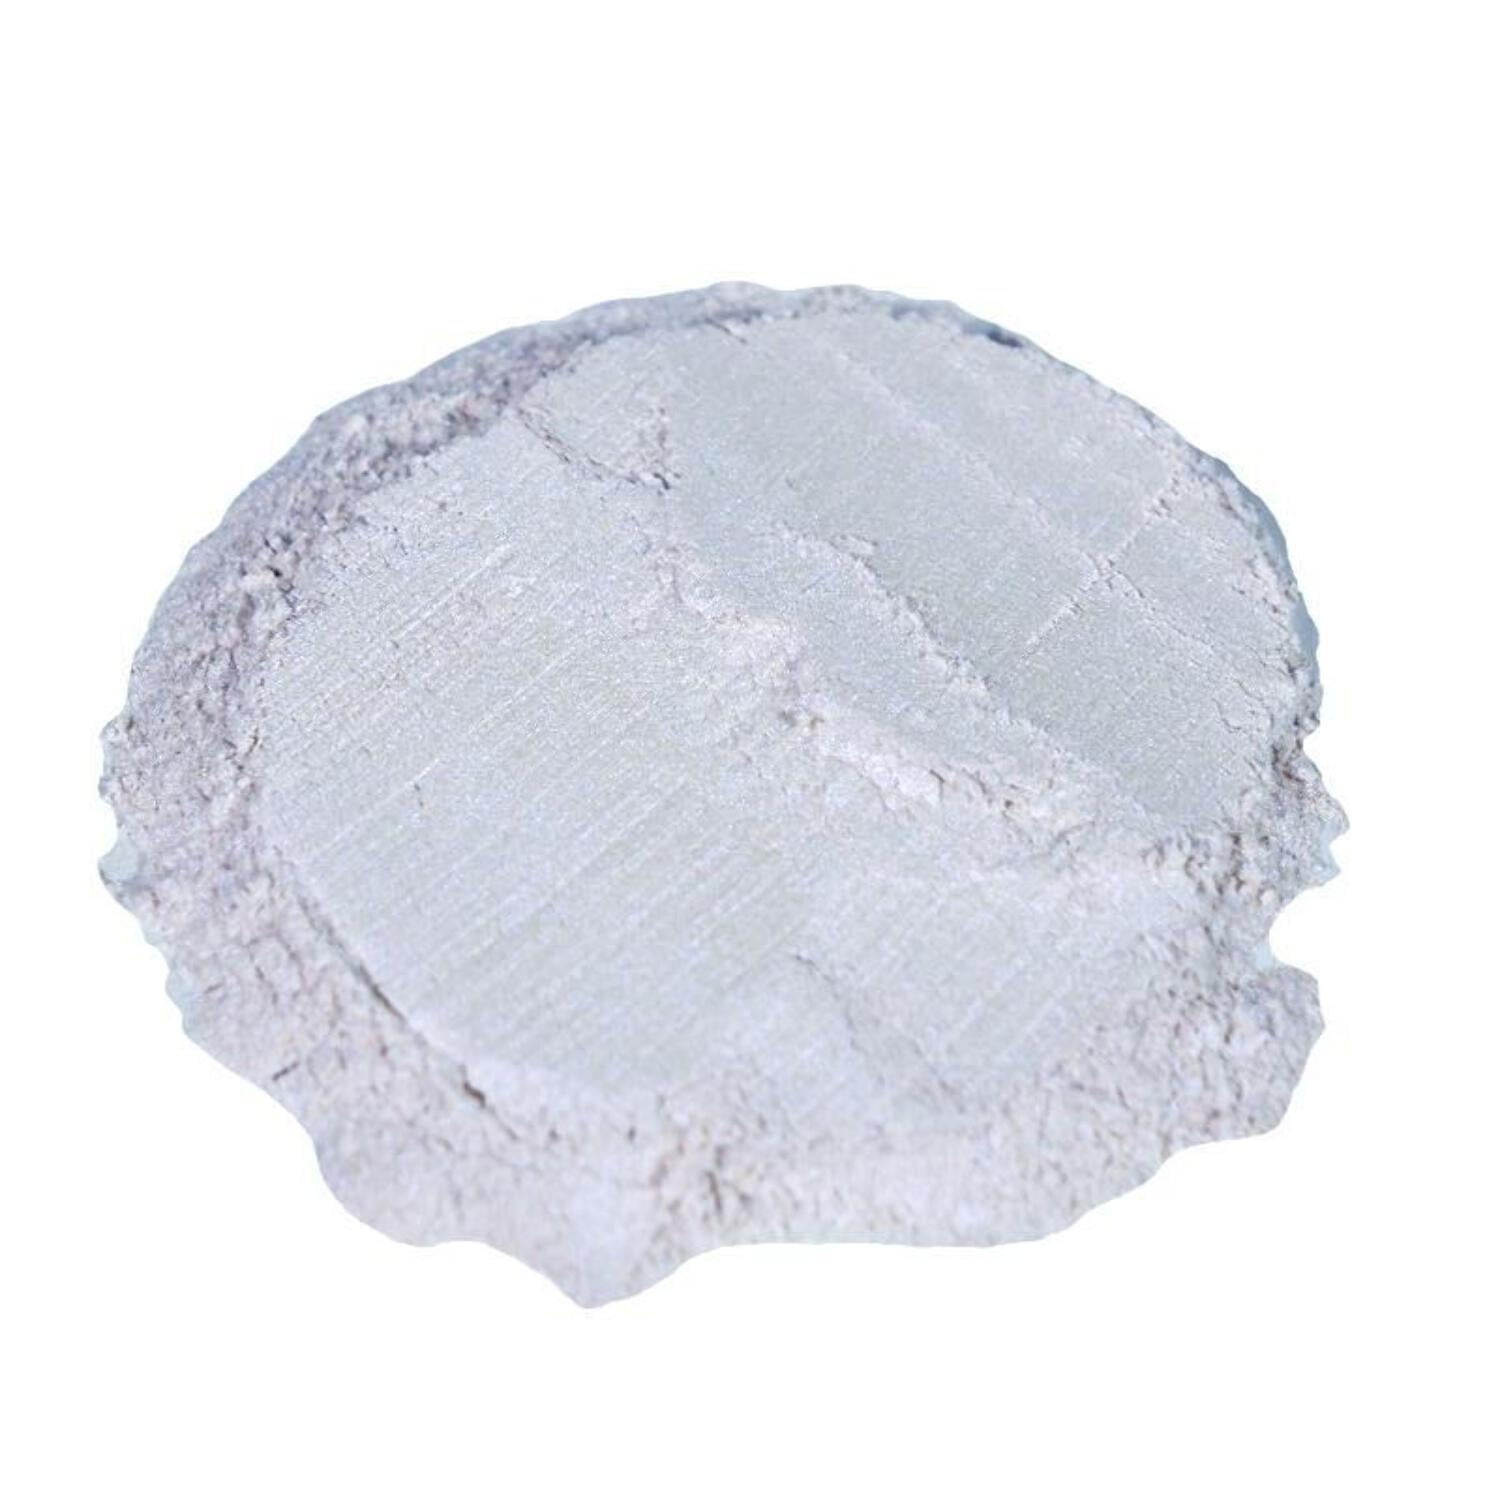 Silver Metallic Aluminum Powder Pigment Titanium Frost Pearl 25g |  Automotive Grade Pearlescent Paint Colorant | Epoxy Resin & Lacquer Dye |  UV